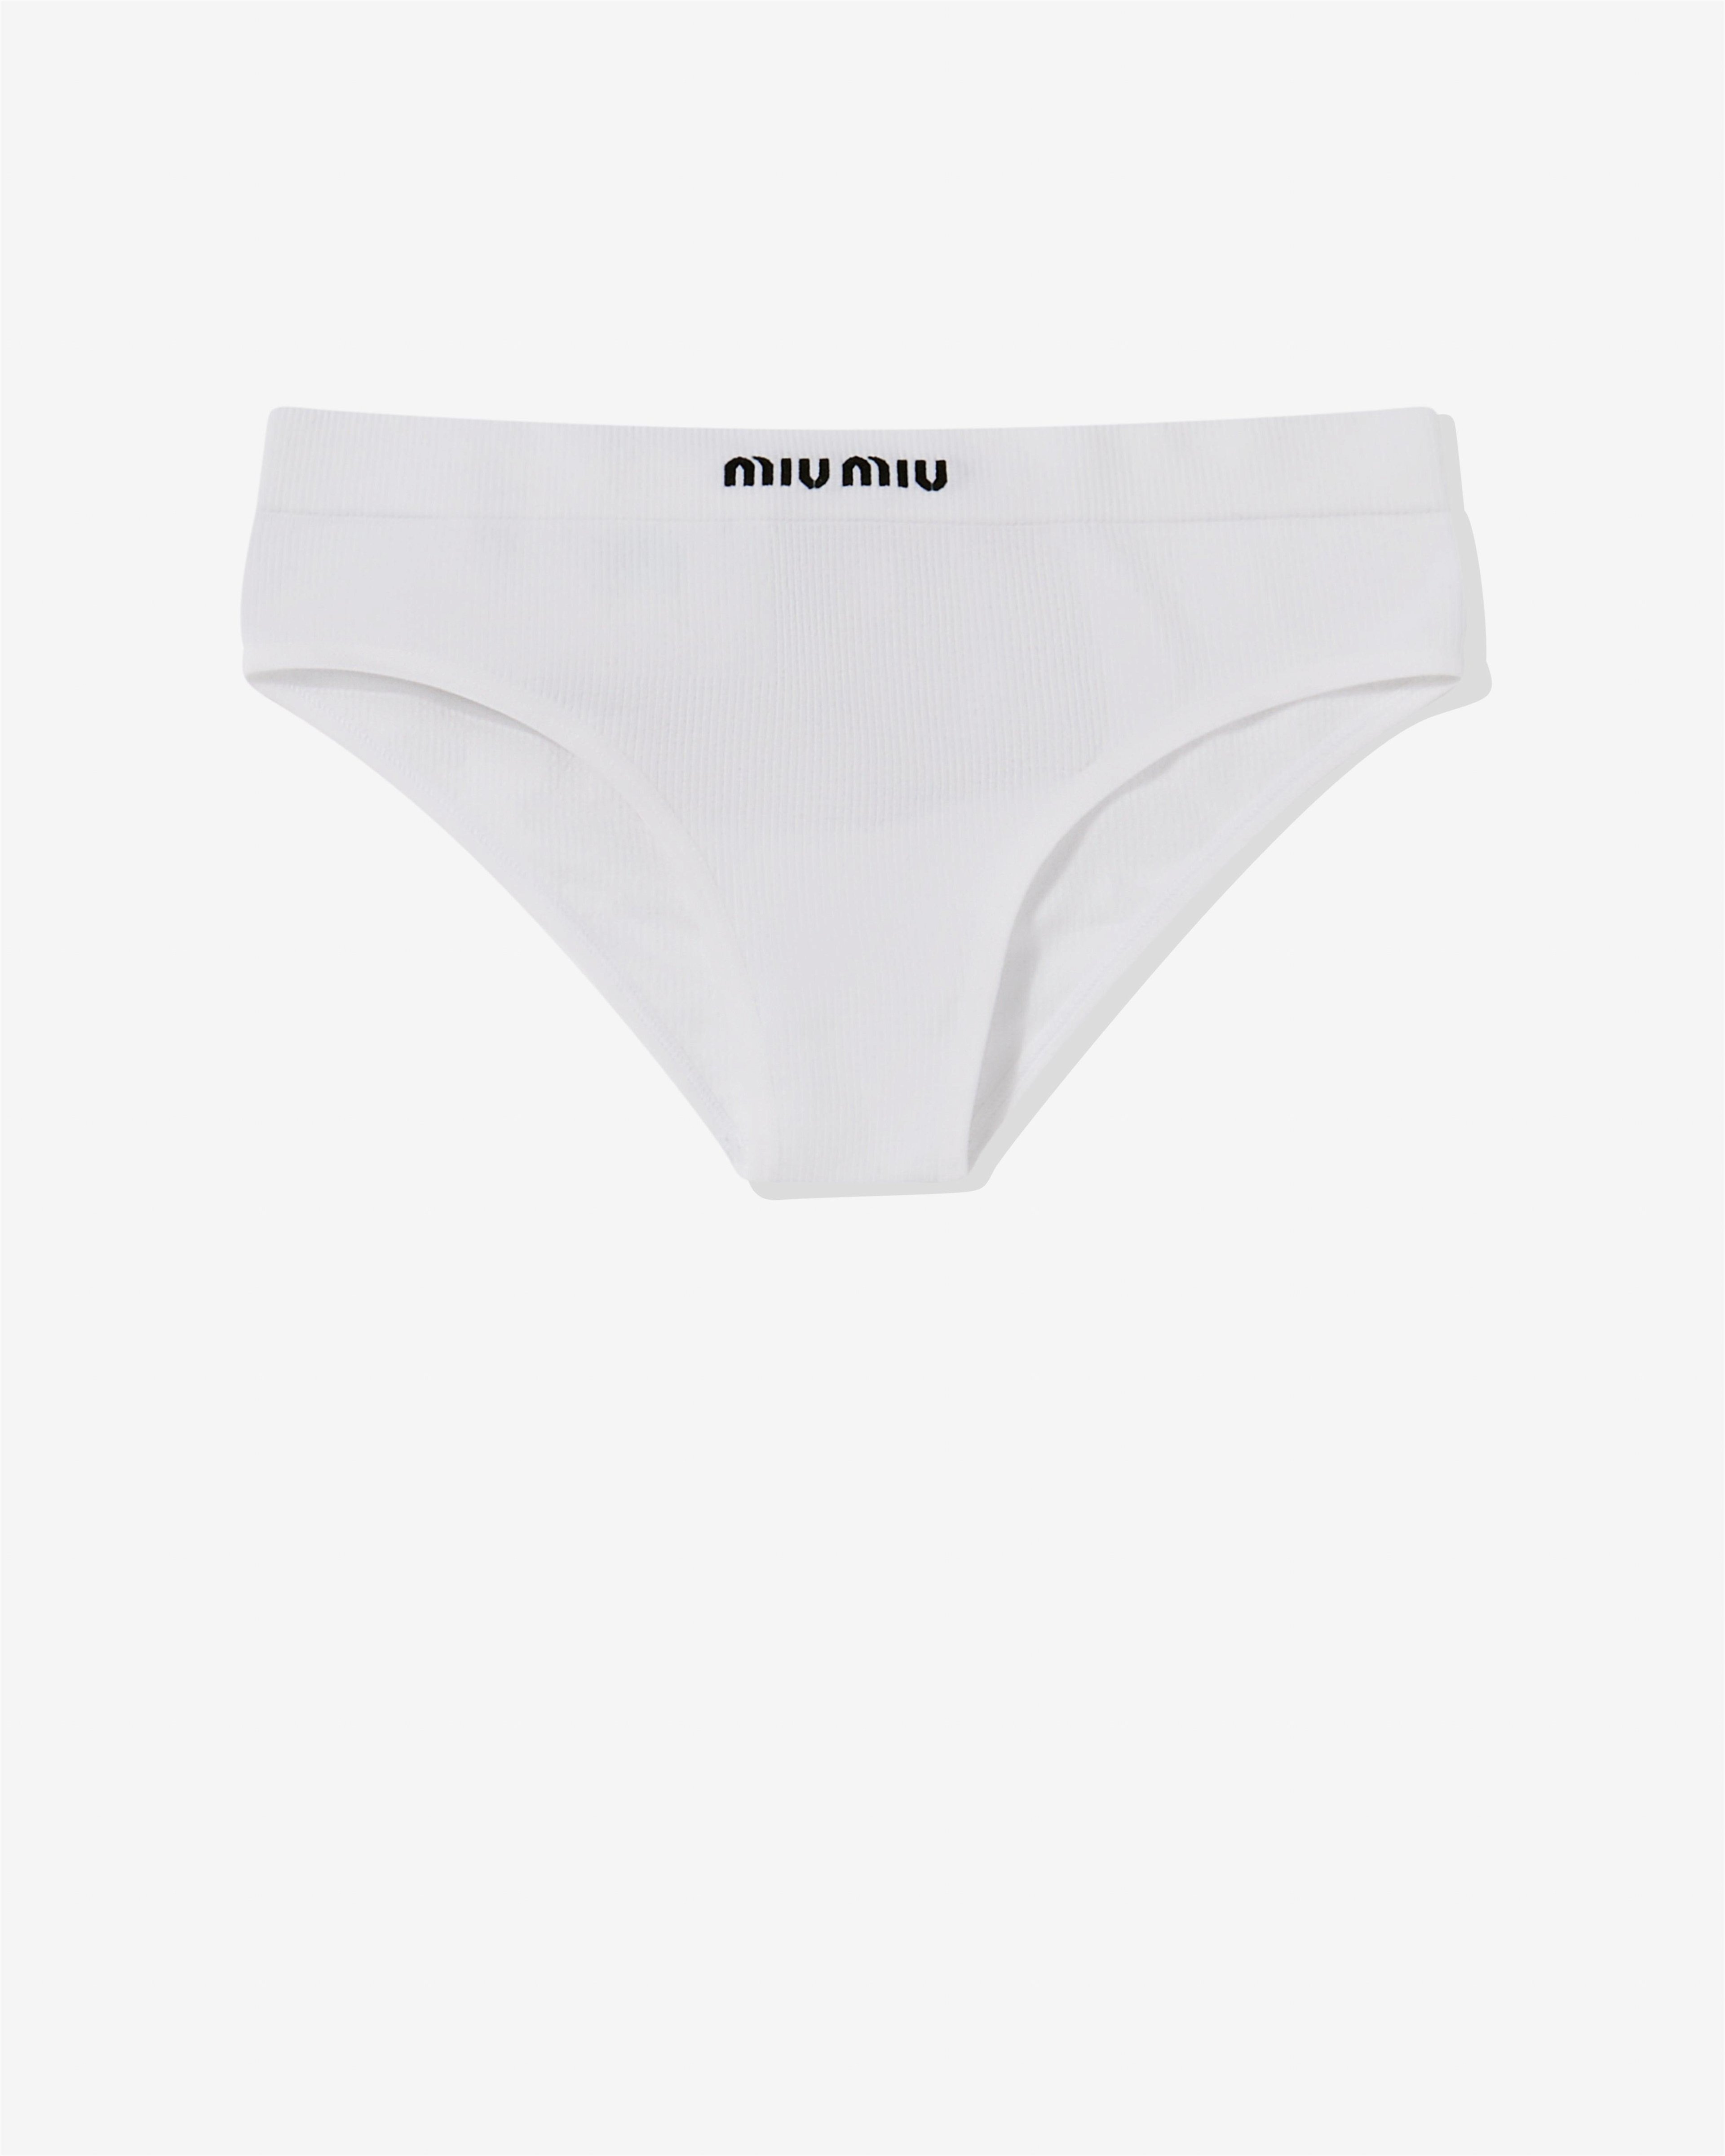 Miu Miu - Women's Seamless Panties - (White) by MIU MIU